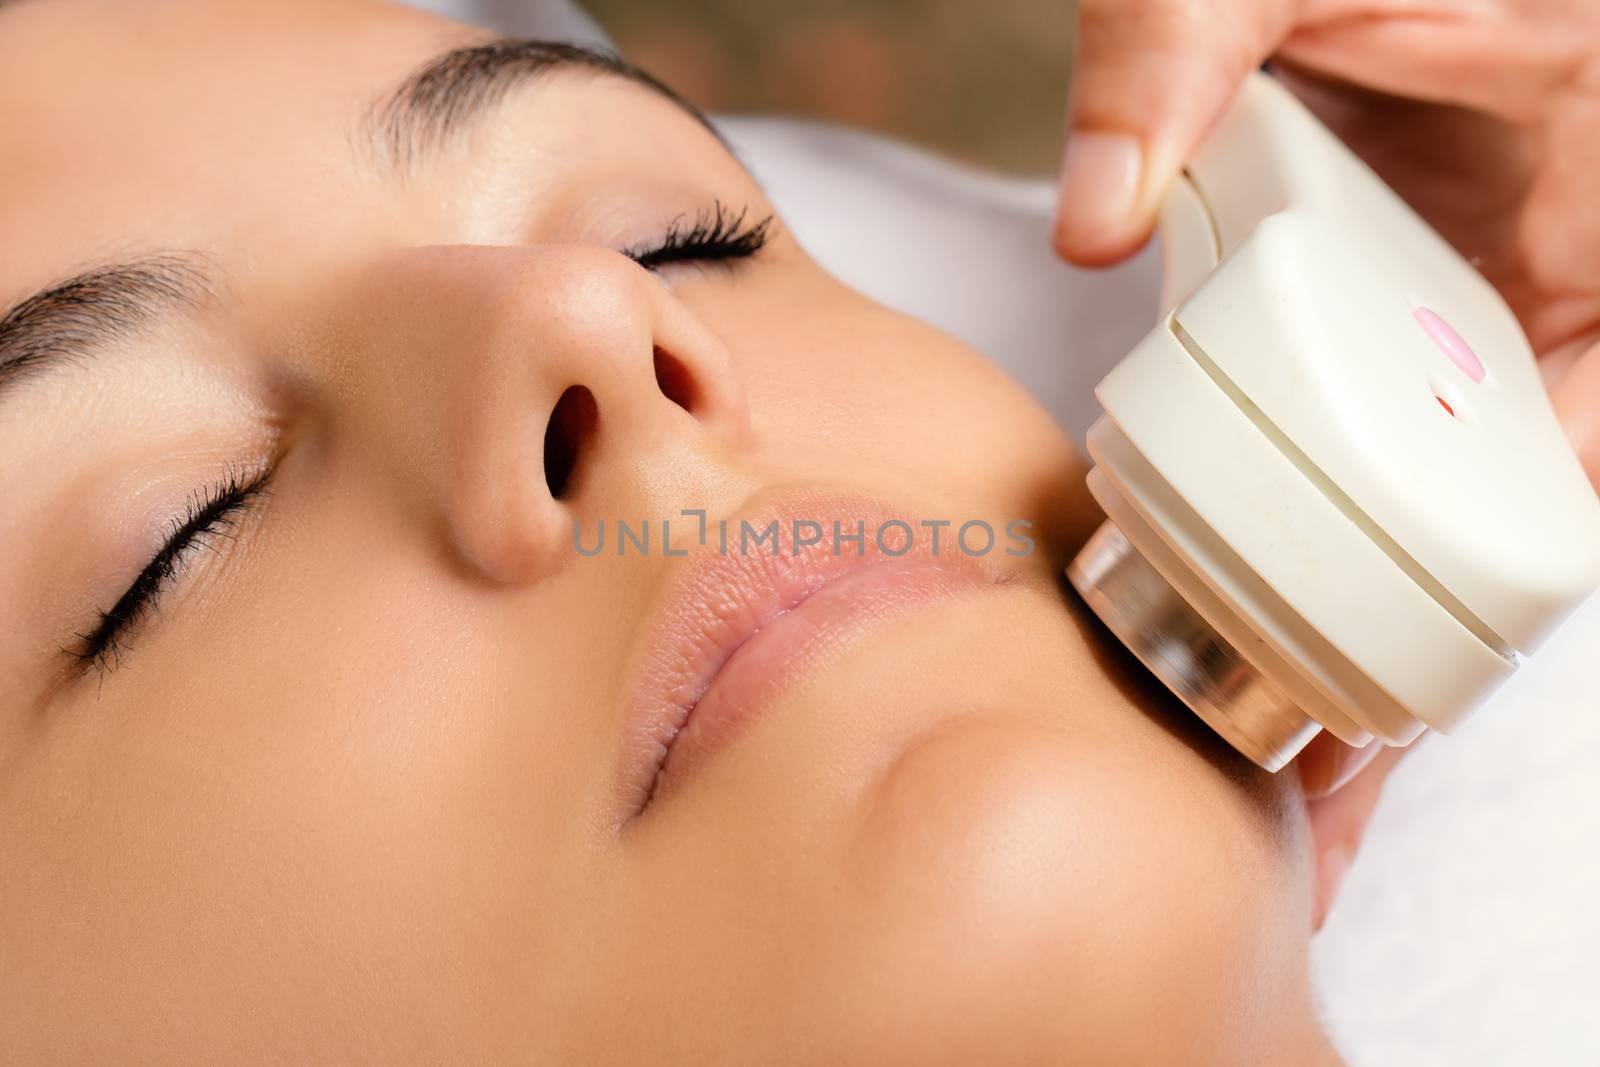 Ultrasonic facial treatment on woman. by karelnoppe